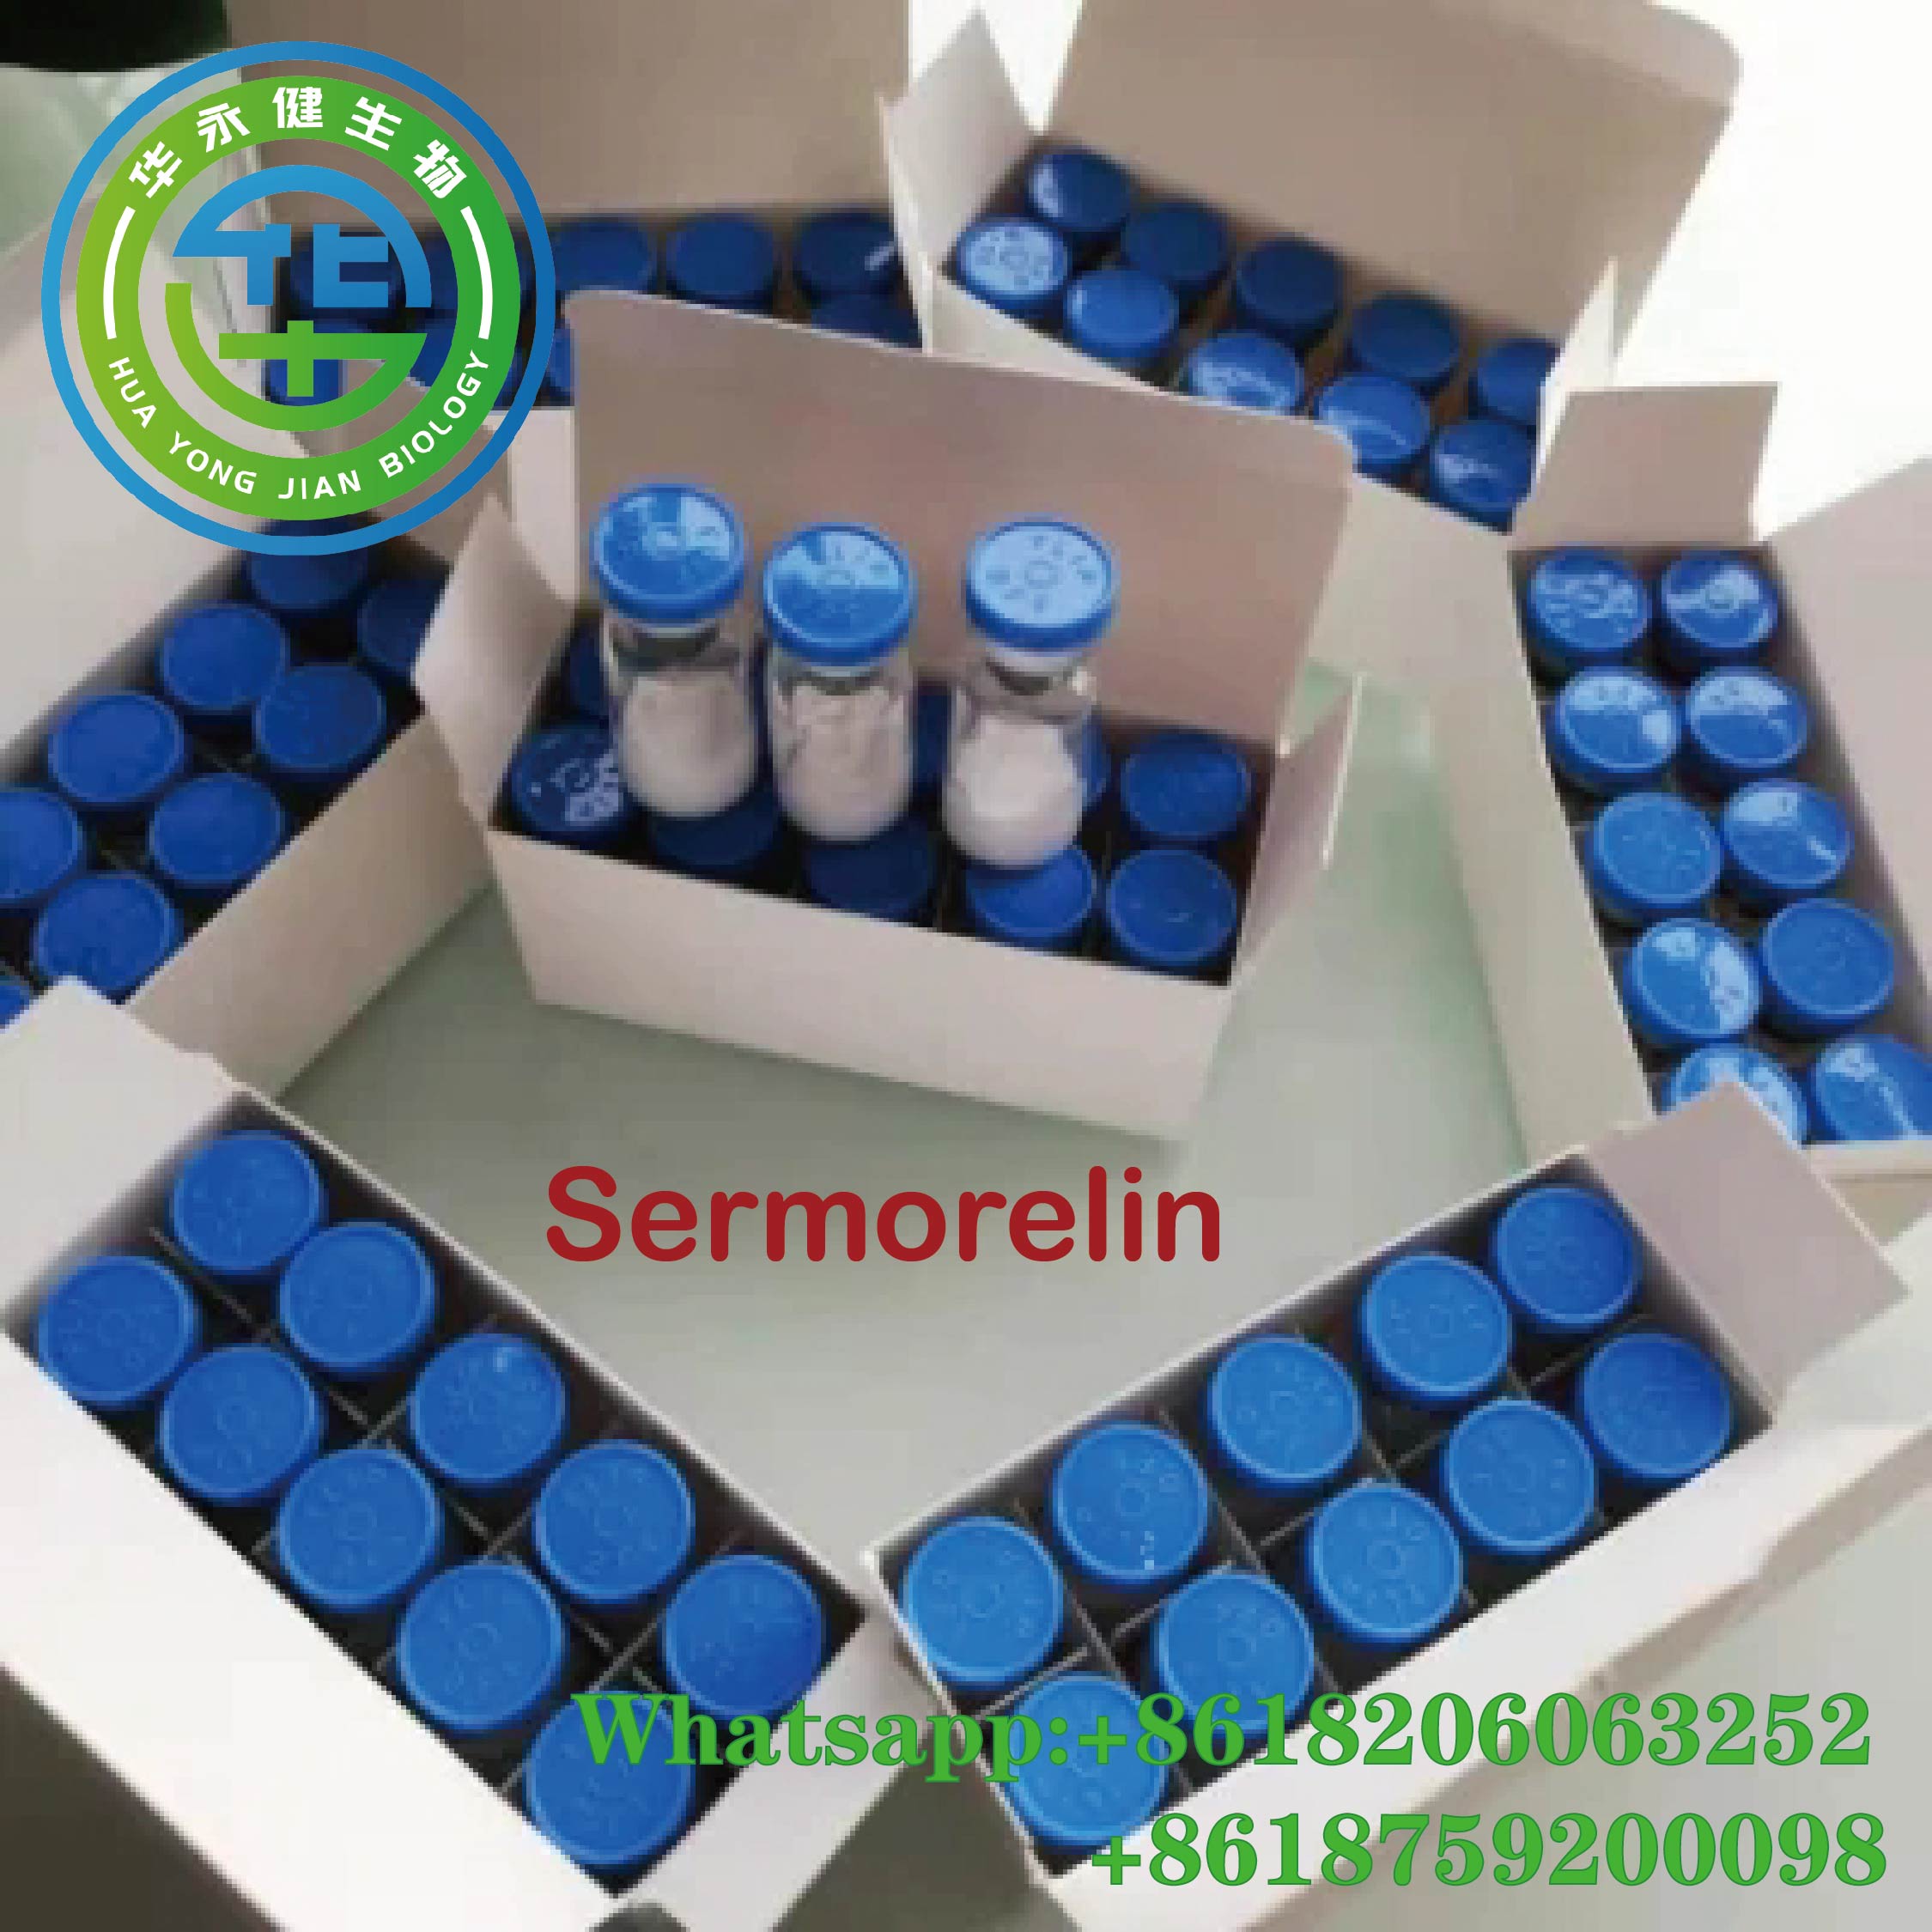 Muscle Gain Supplement Bodybuilding Sermorelin Steroids Powder Chemical CasNO.86168-78-7